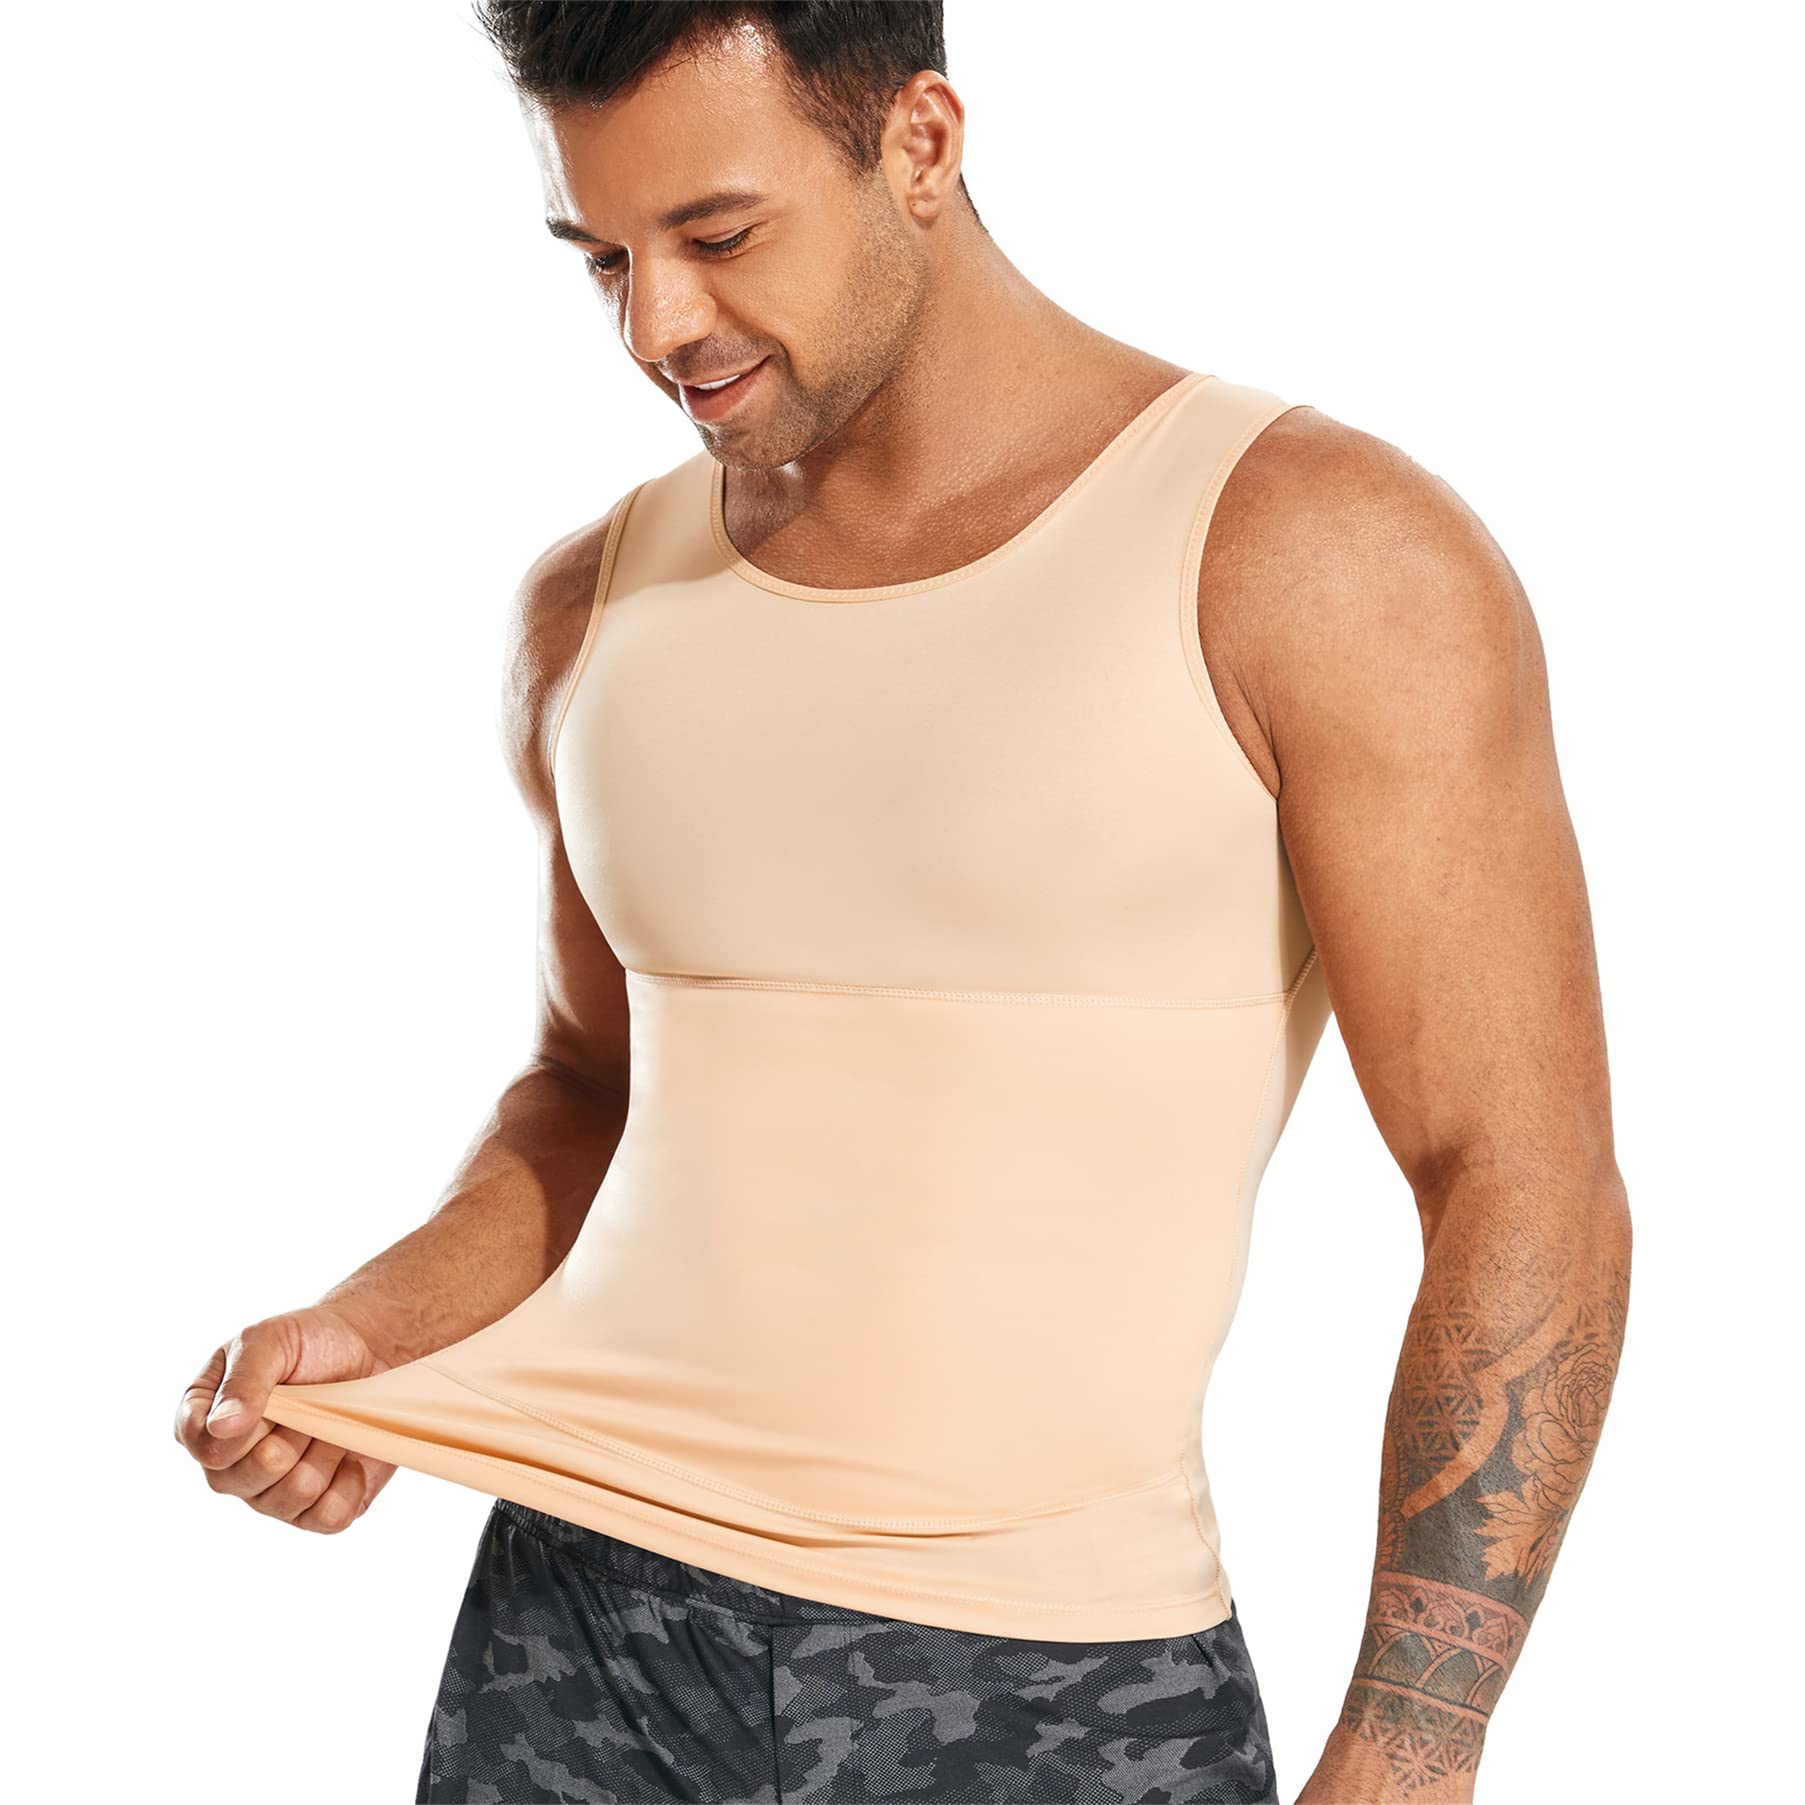 Mens Body Shaper Slimming Shirt Compression Vest Elastic Slim